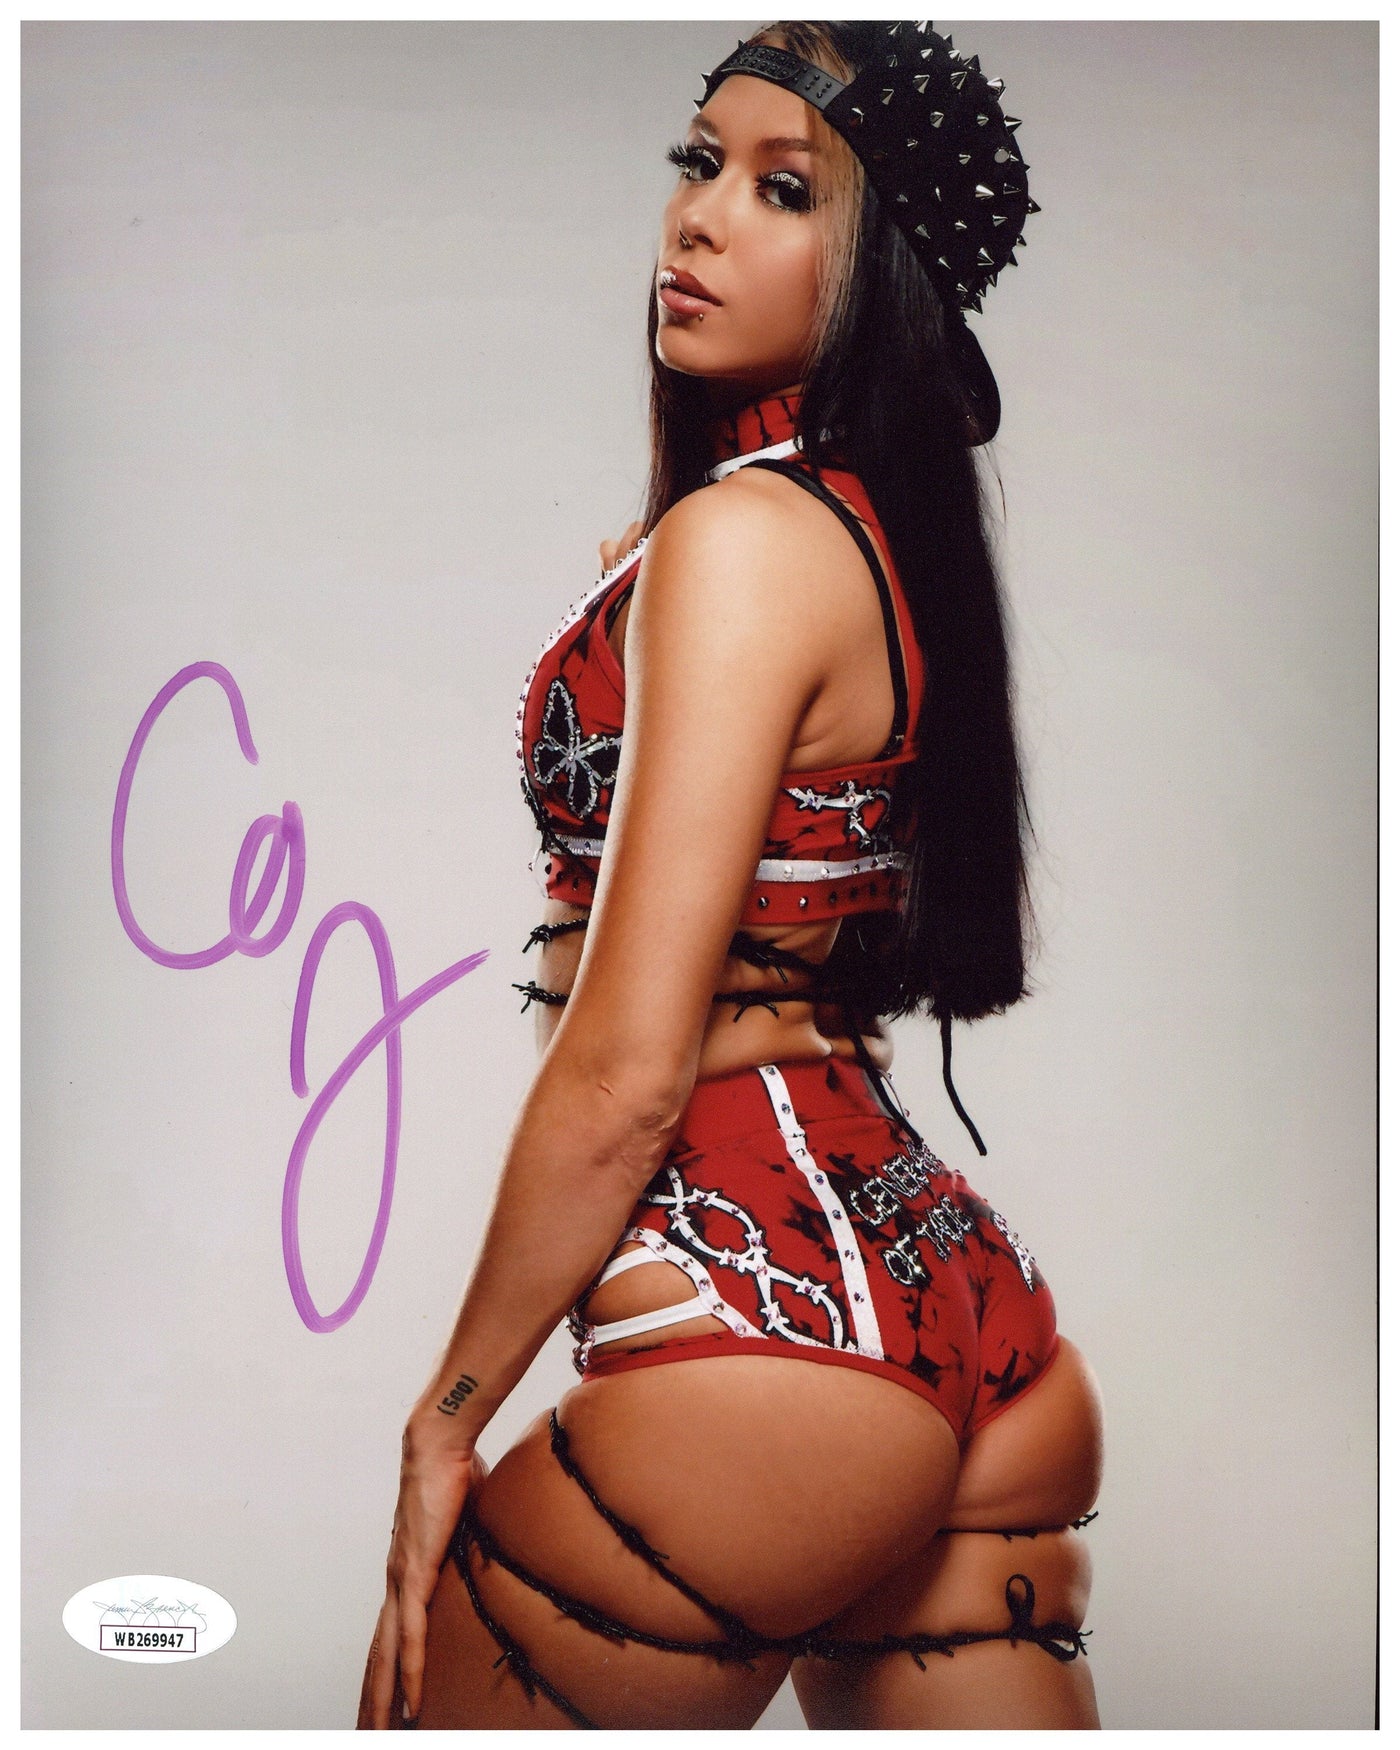 Cora Jade Signed 8x10 Photo WWE NXT Pro Wrestling Autographed JSA COA